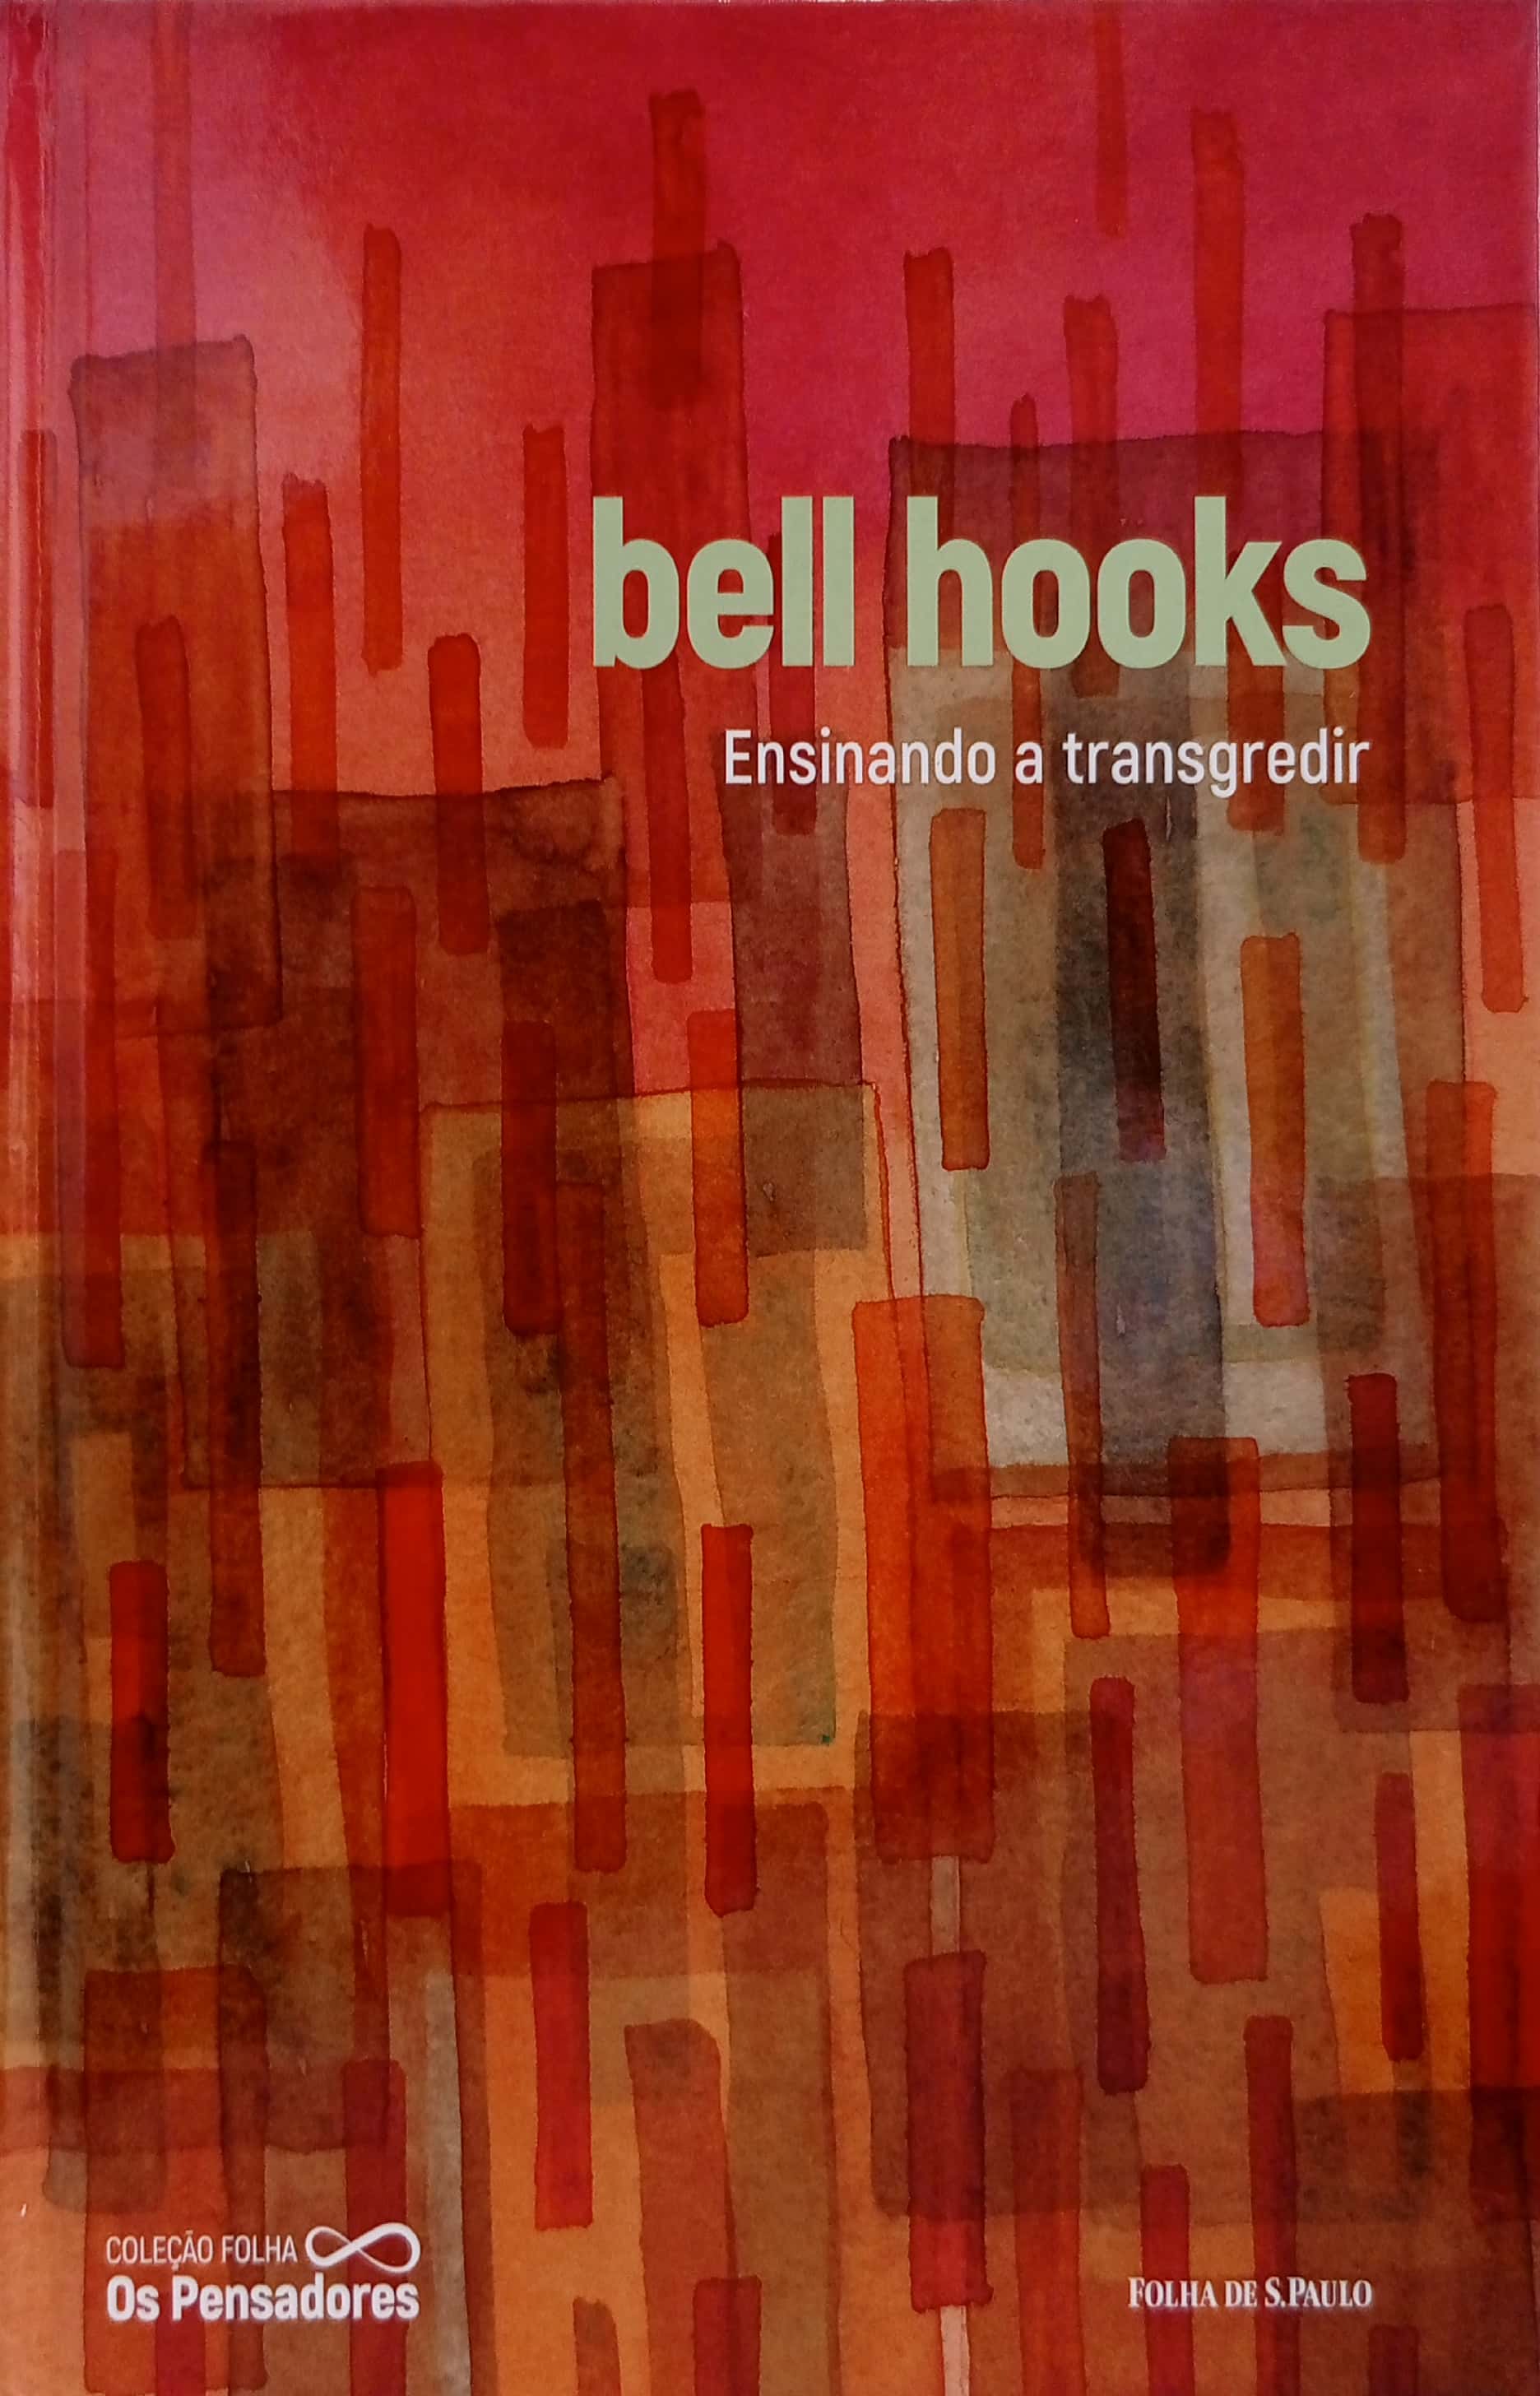 bell hooks: Ensinando a transgredir (Hardcover, Português language, 2021, Folha de S. Paulo)